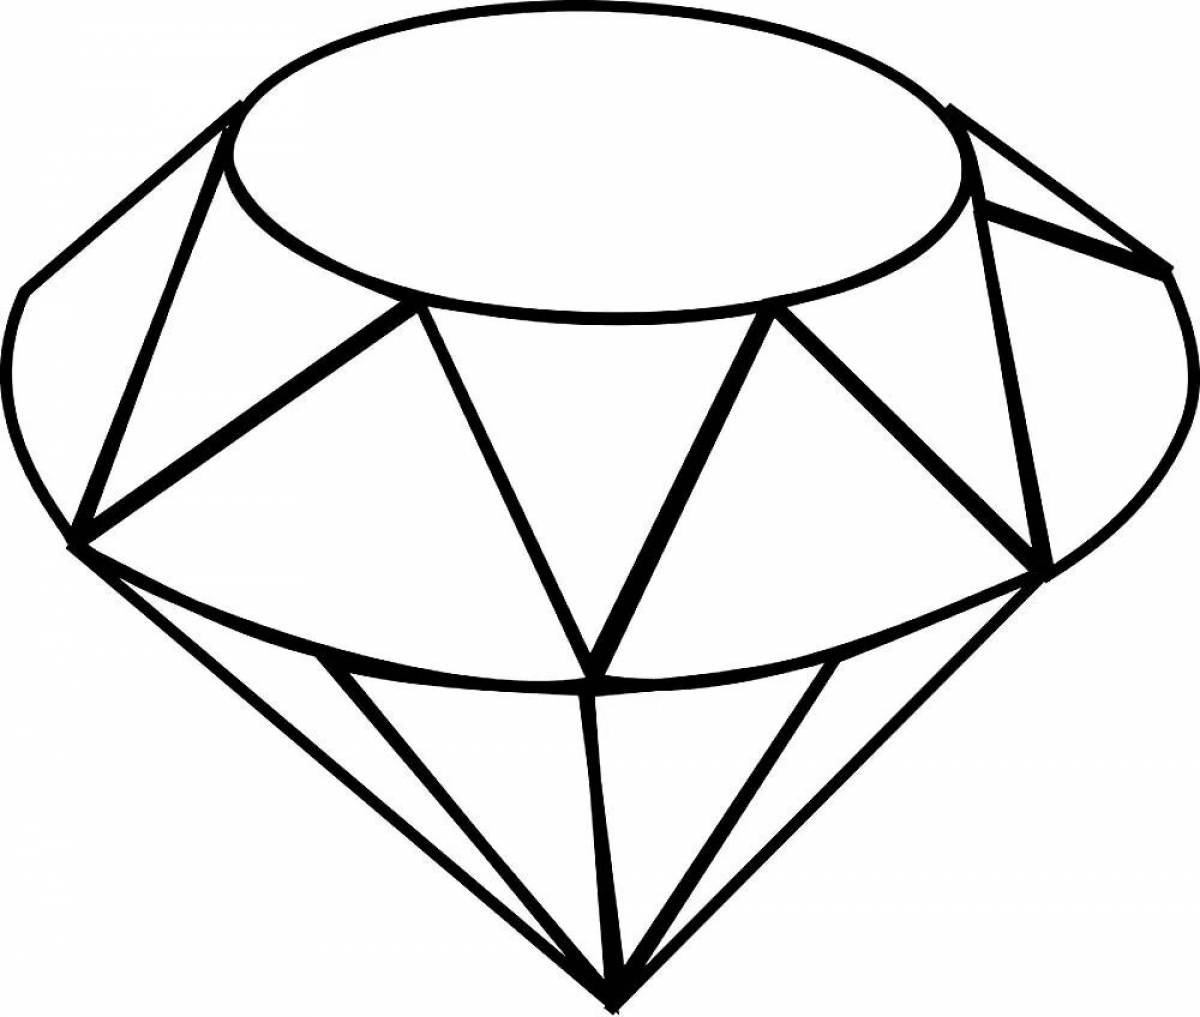 Exalted diamond coloring page для детей